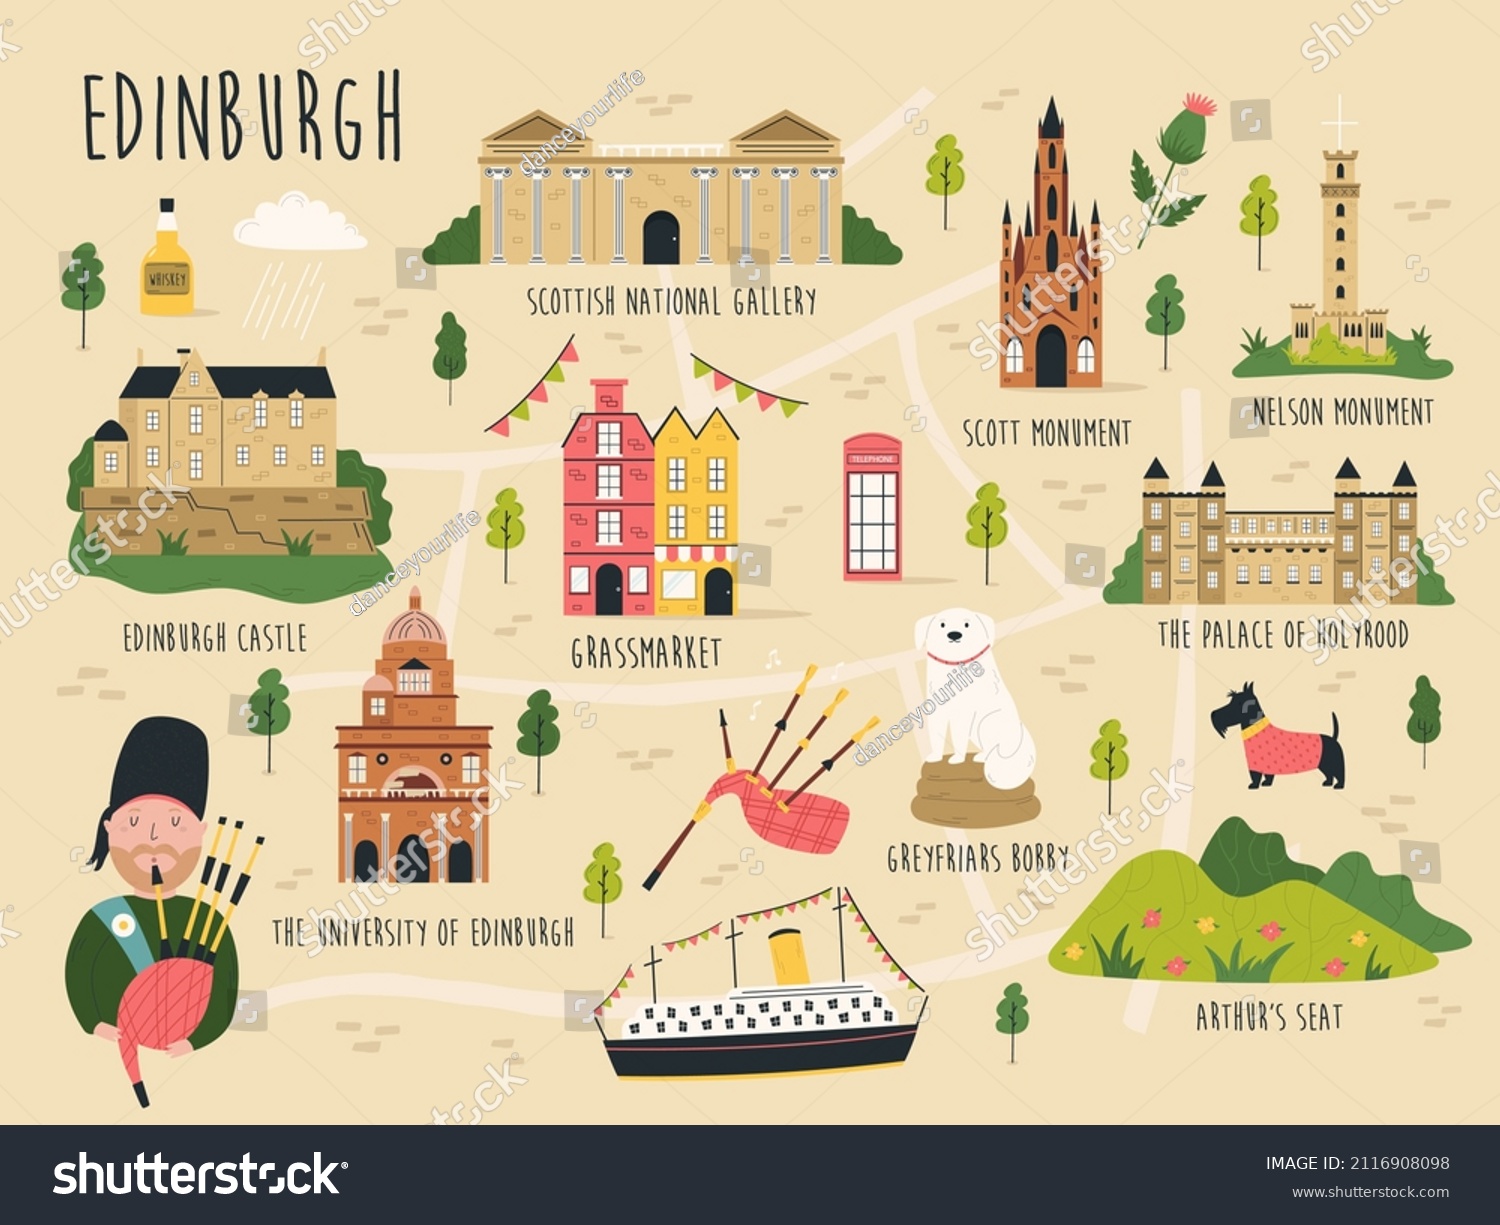 SVG of Vector illustration of map of Edinburgh with streets, symbols, famous landmarks. Bright design for tourist leaflets, magazines, posters. svg